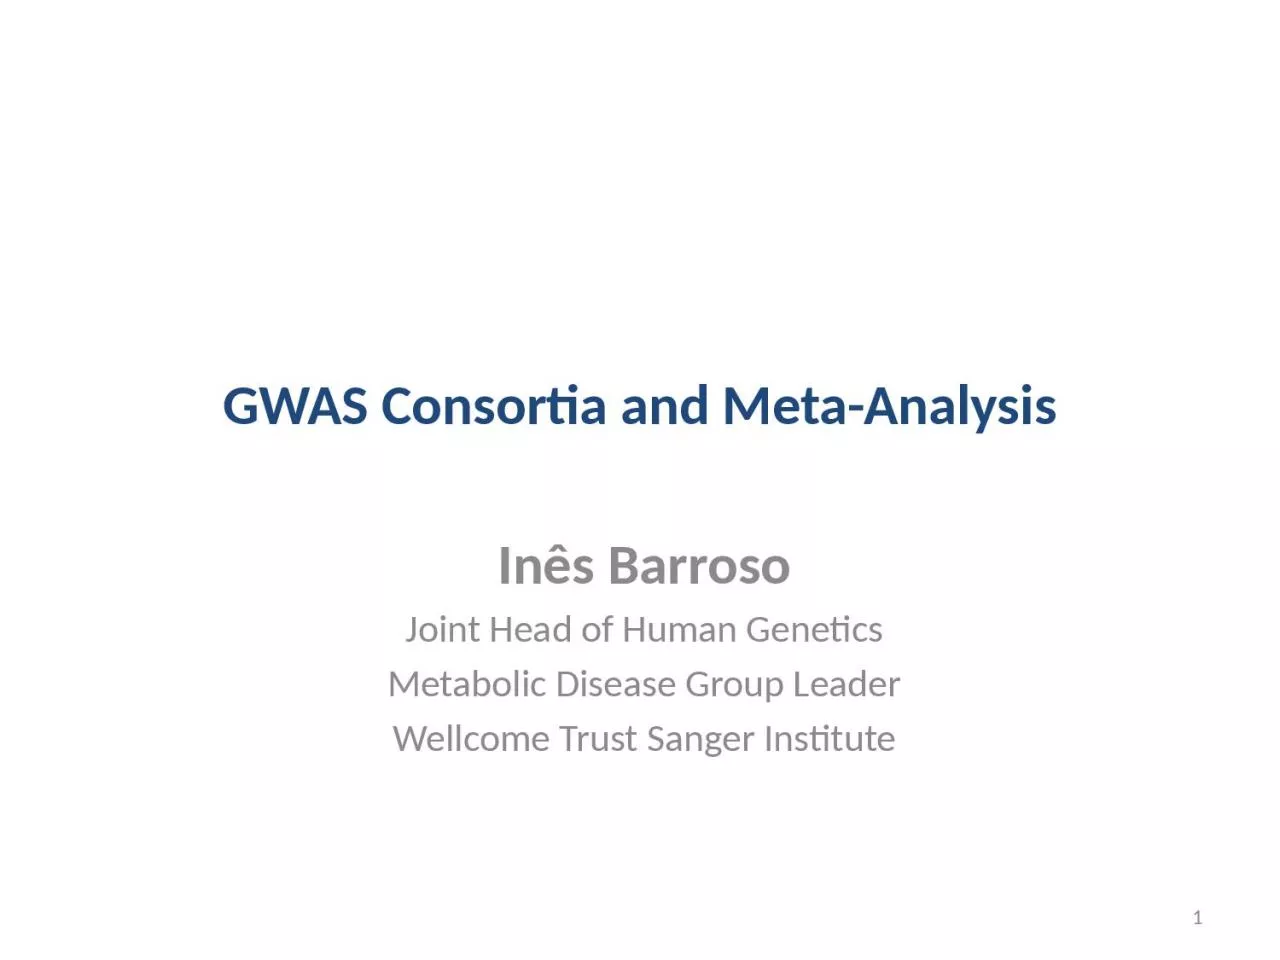 GWAS Consortia and Meta-Analysis